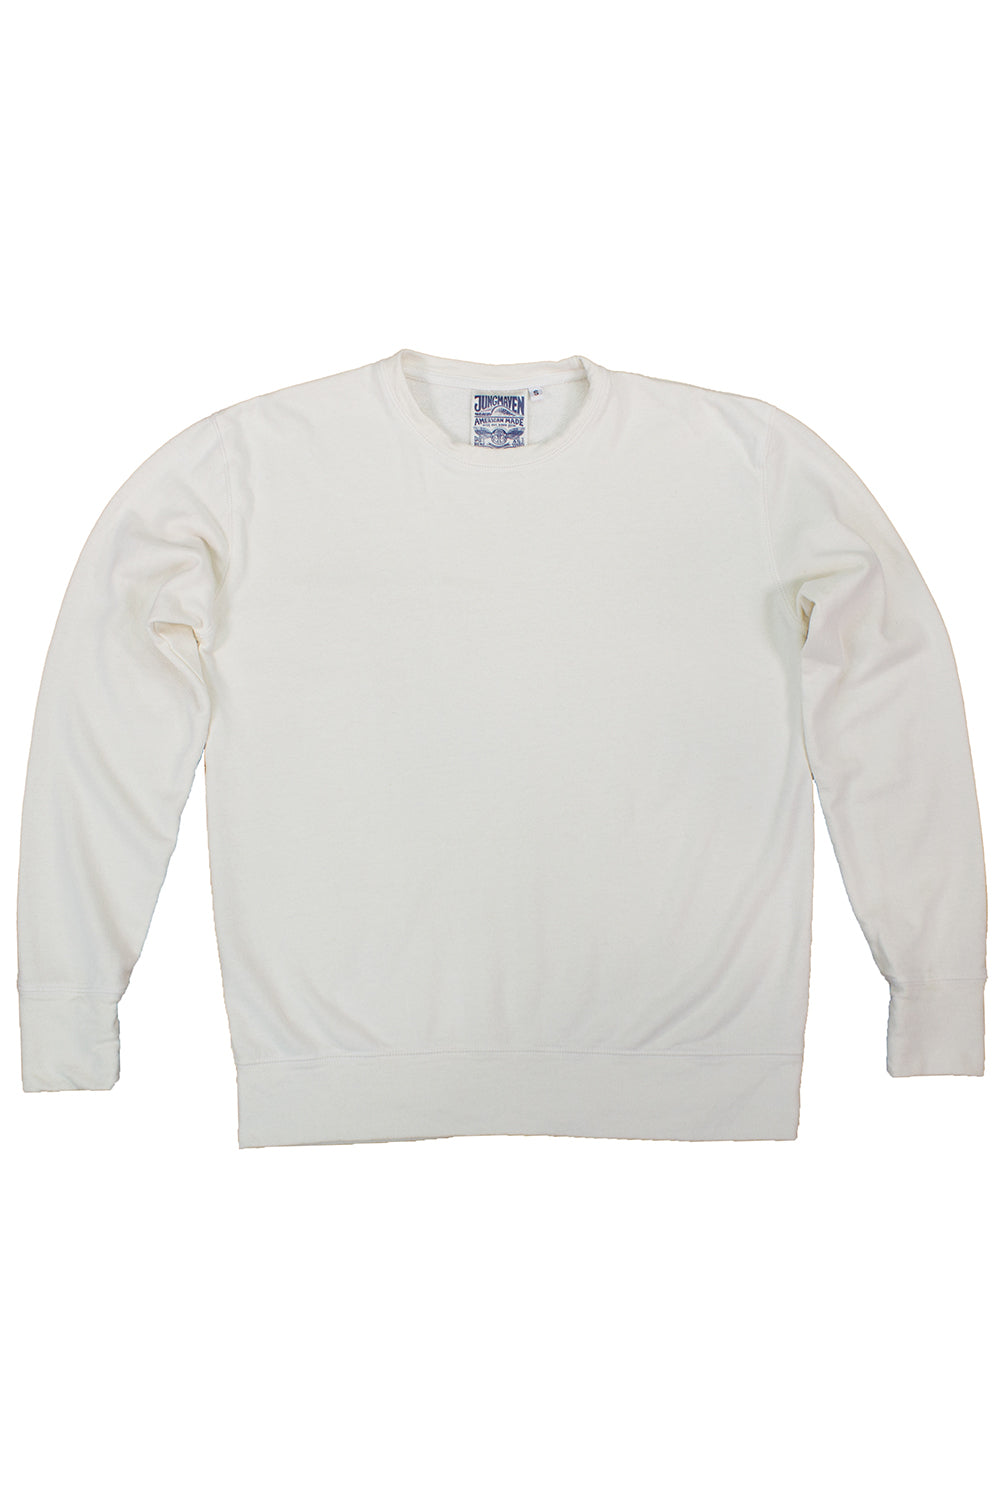 Tahoe Sweatshirt | Jungmaven Hemp Clothing & Accessories / Color: Washed White